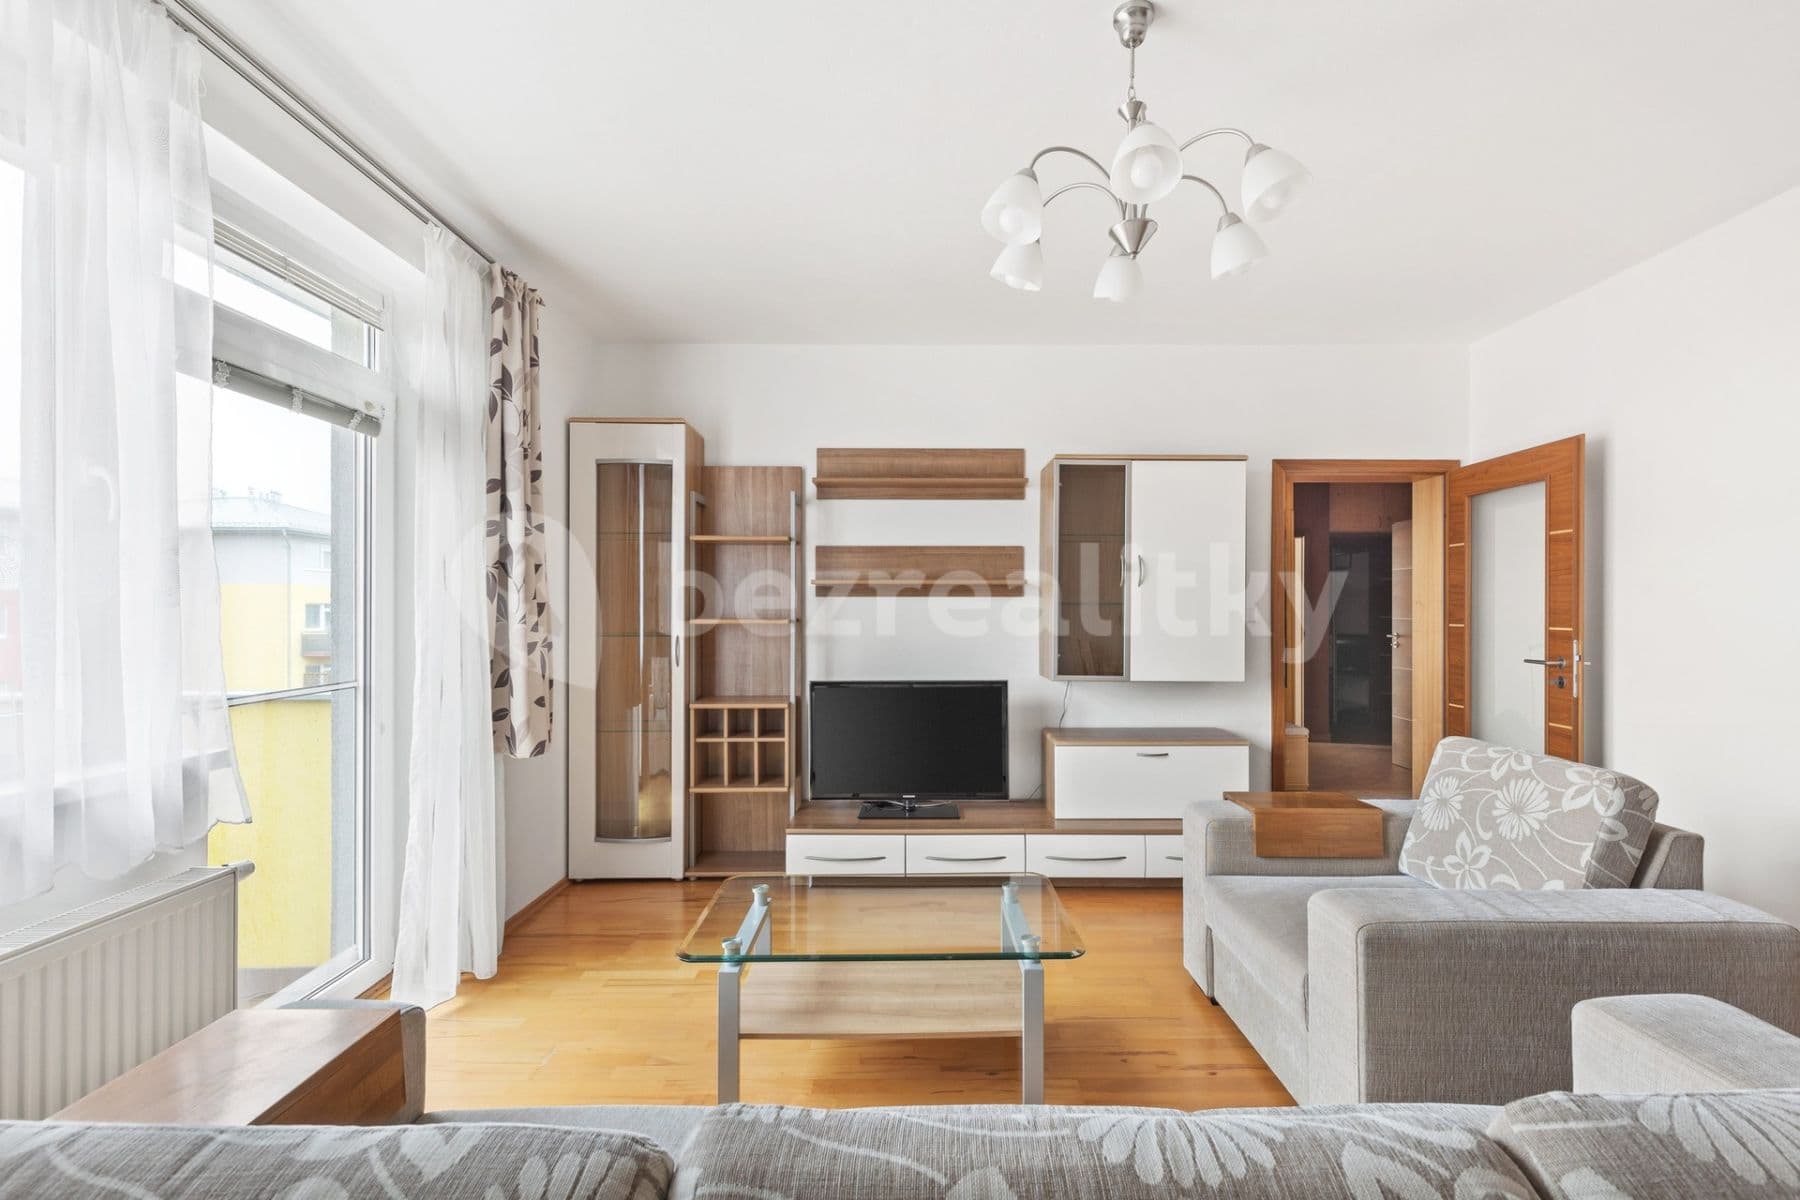 2 bedroom with open-plan kitchen flat to rent, 82 m², Českodubská, Prague, Prague